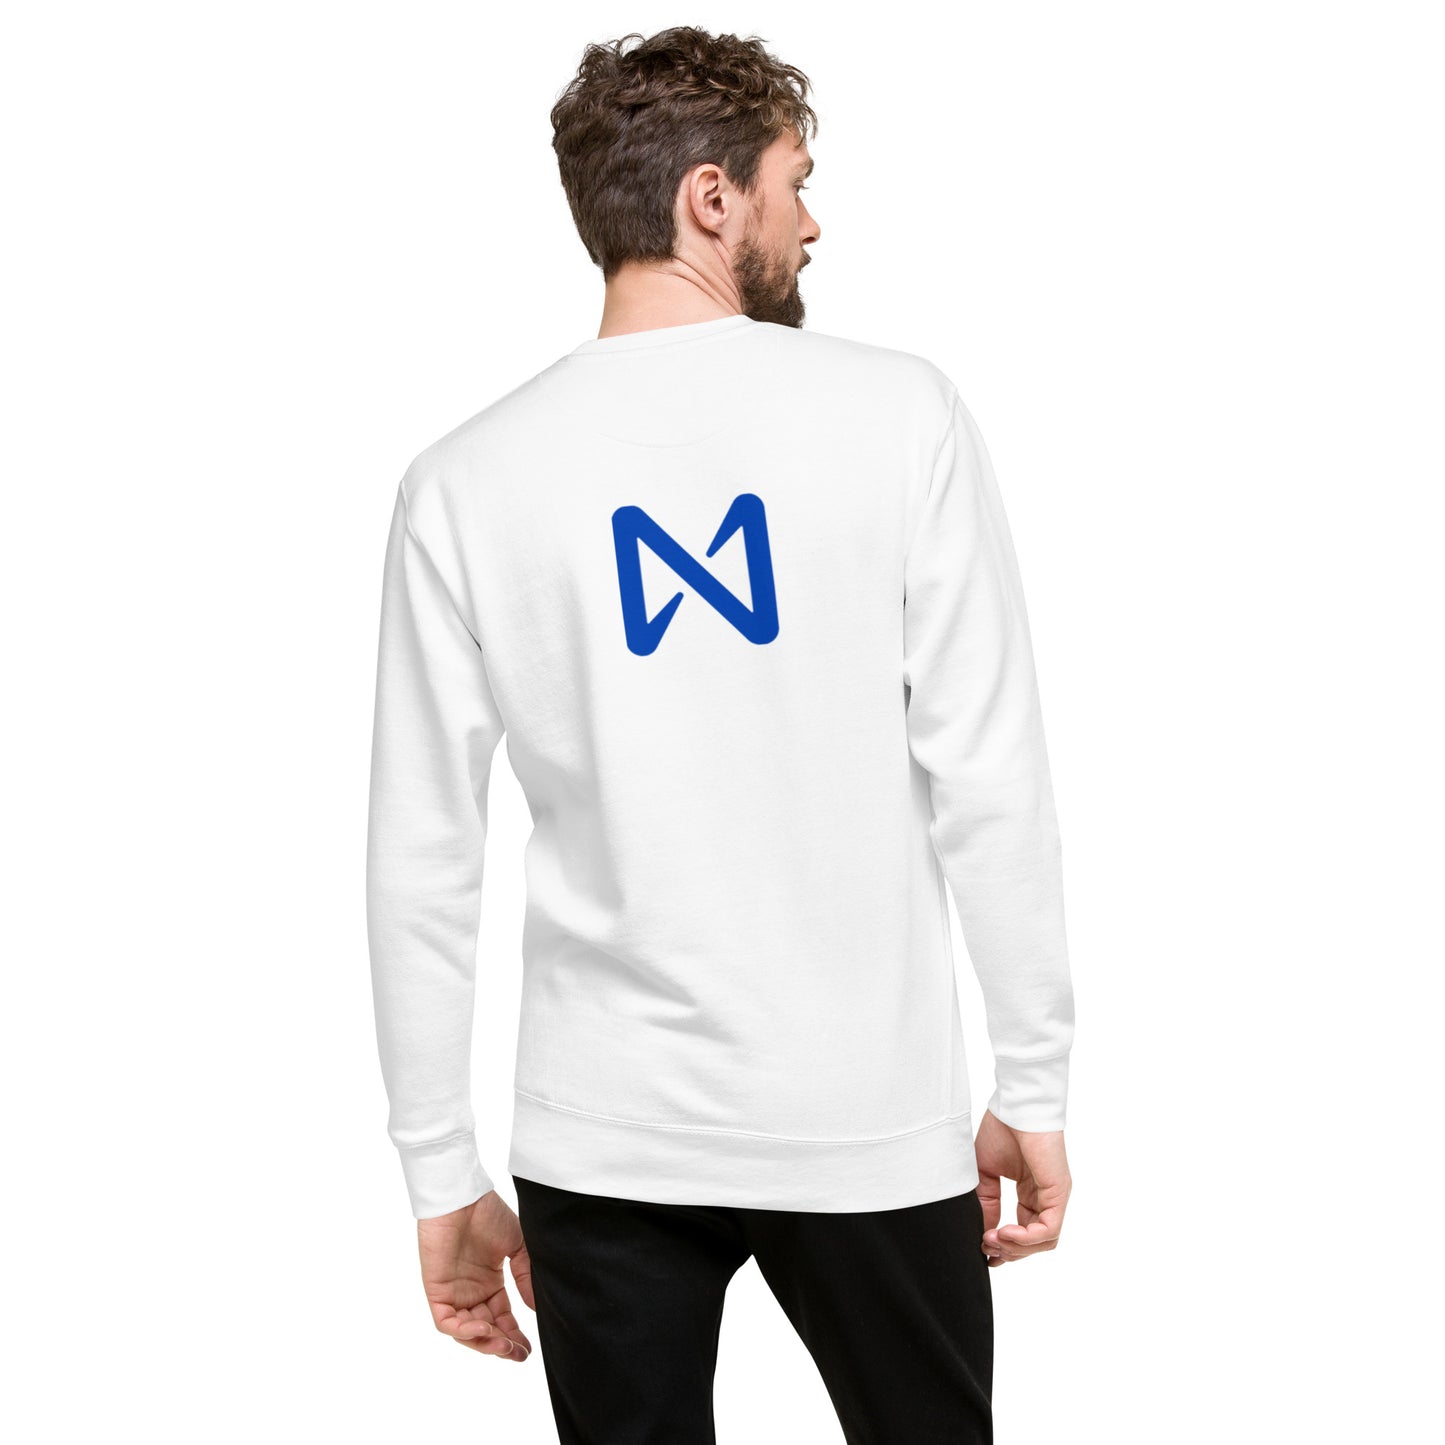 OPEN THE WEB + NEAR BLUE ON WHITE Unisex Premium Sweatshirt